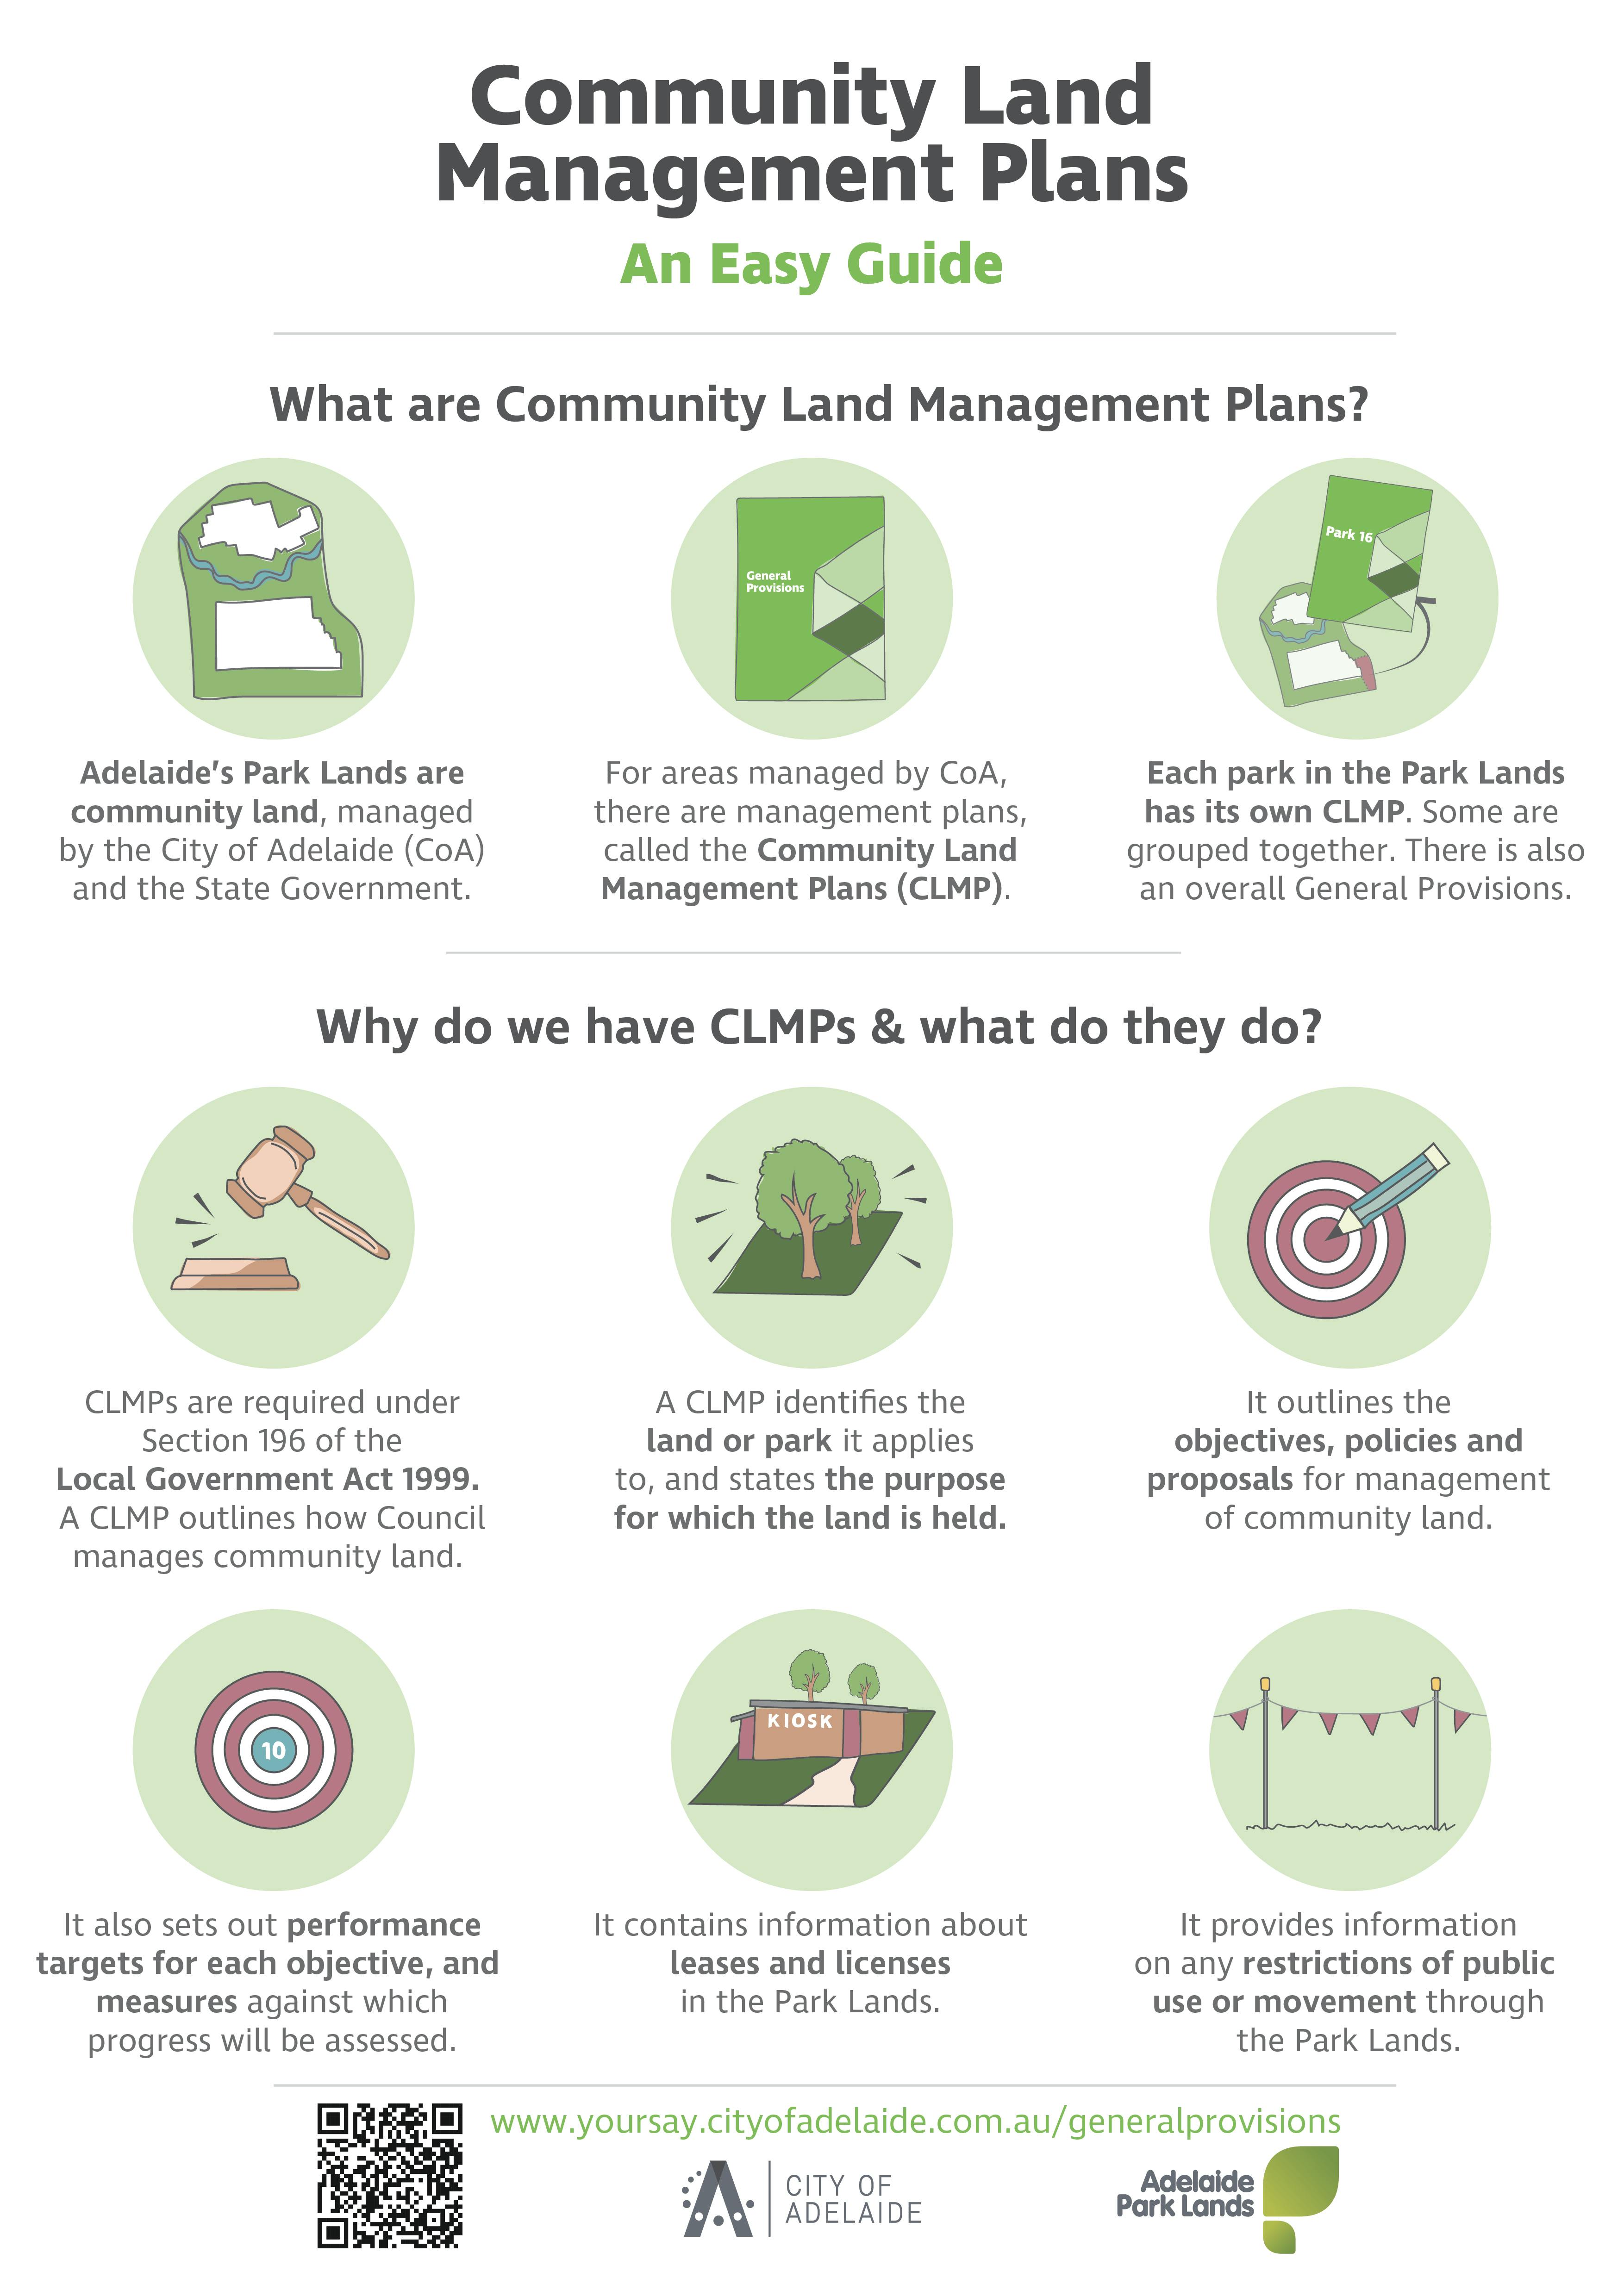 1 Community Land Management Plans - An Easy Guide.jpg